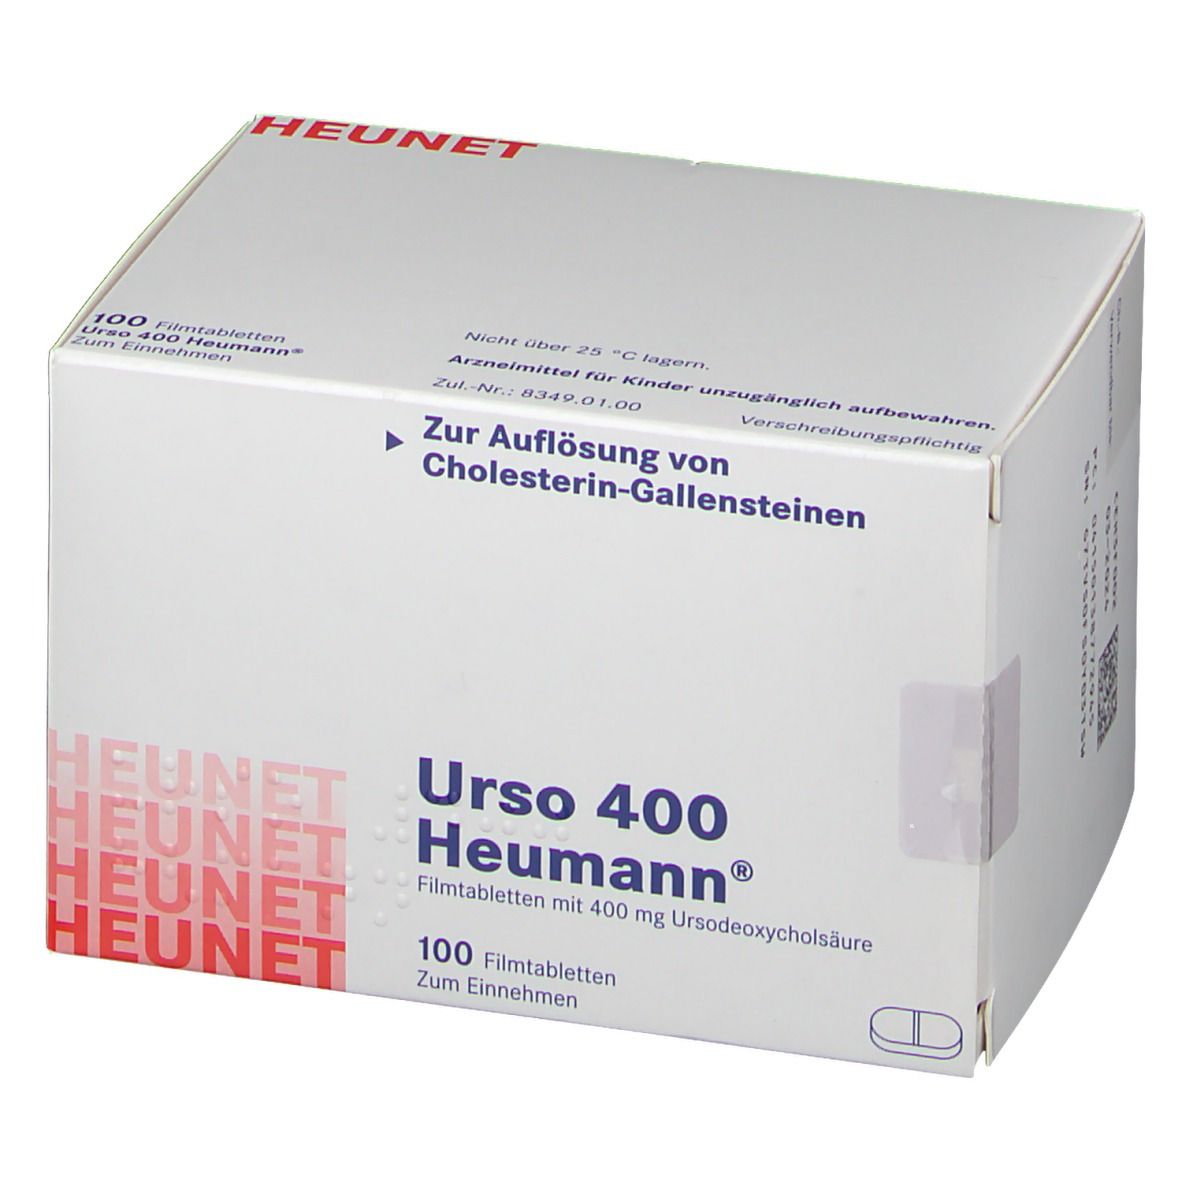 Urso 400 Heumann®